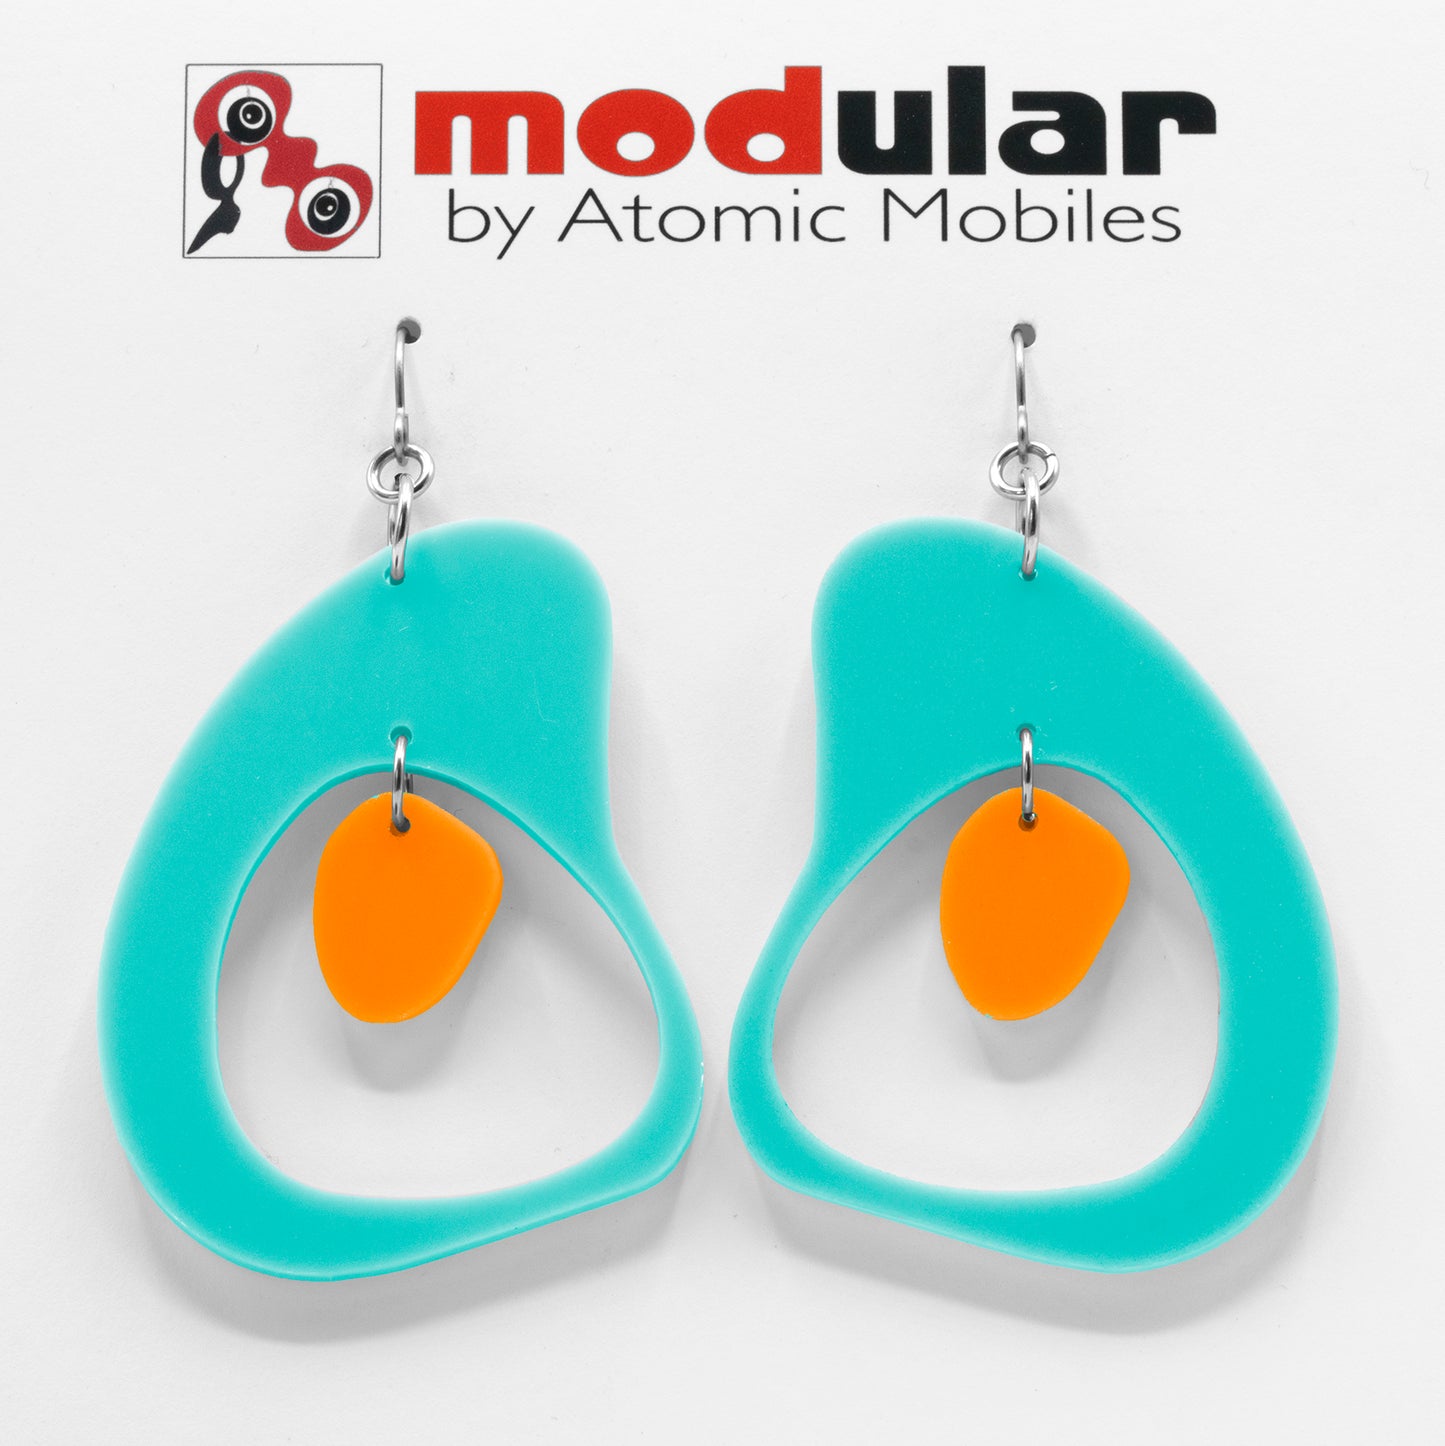 MODular Earrings - Boomerang Statement Earrings in Aqua and Orange by AtomicMobiles.com - retro era inspired mod handmade jewelry